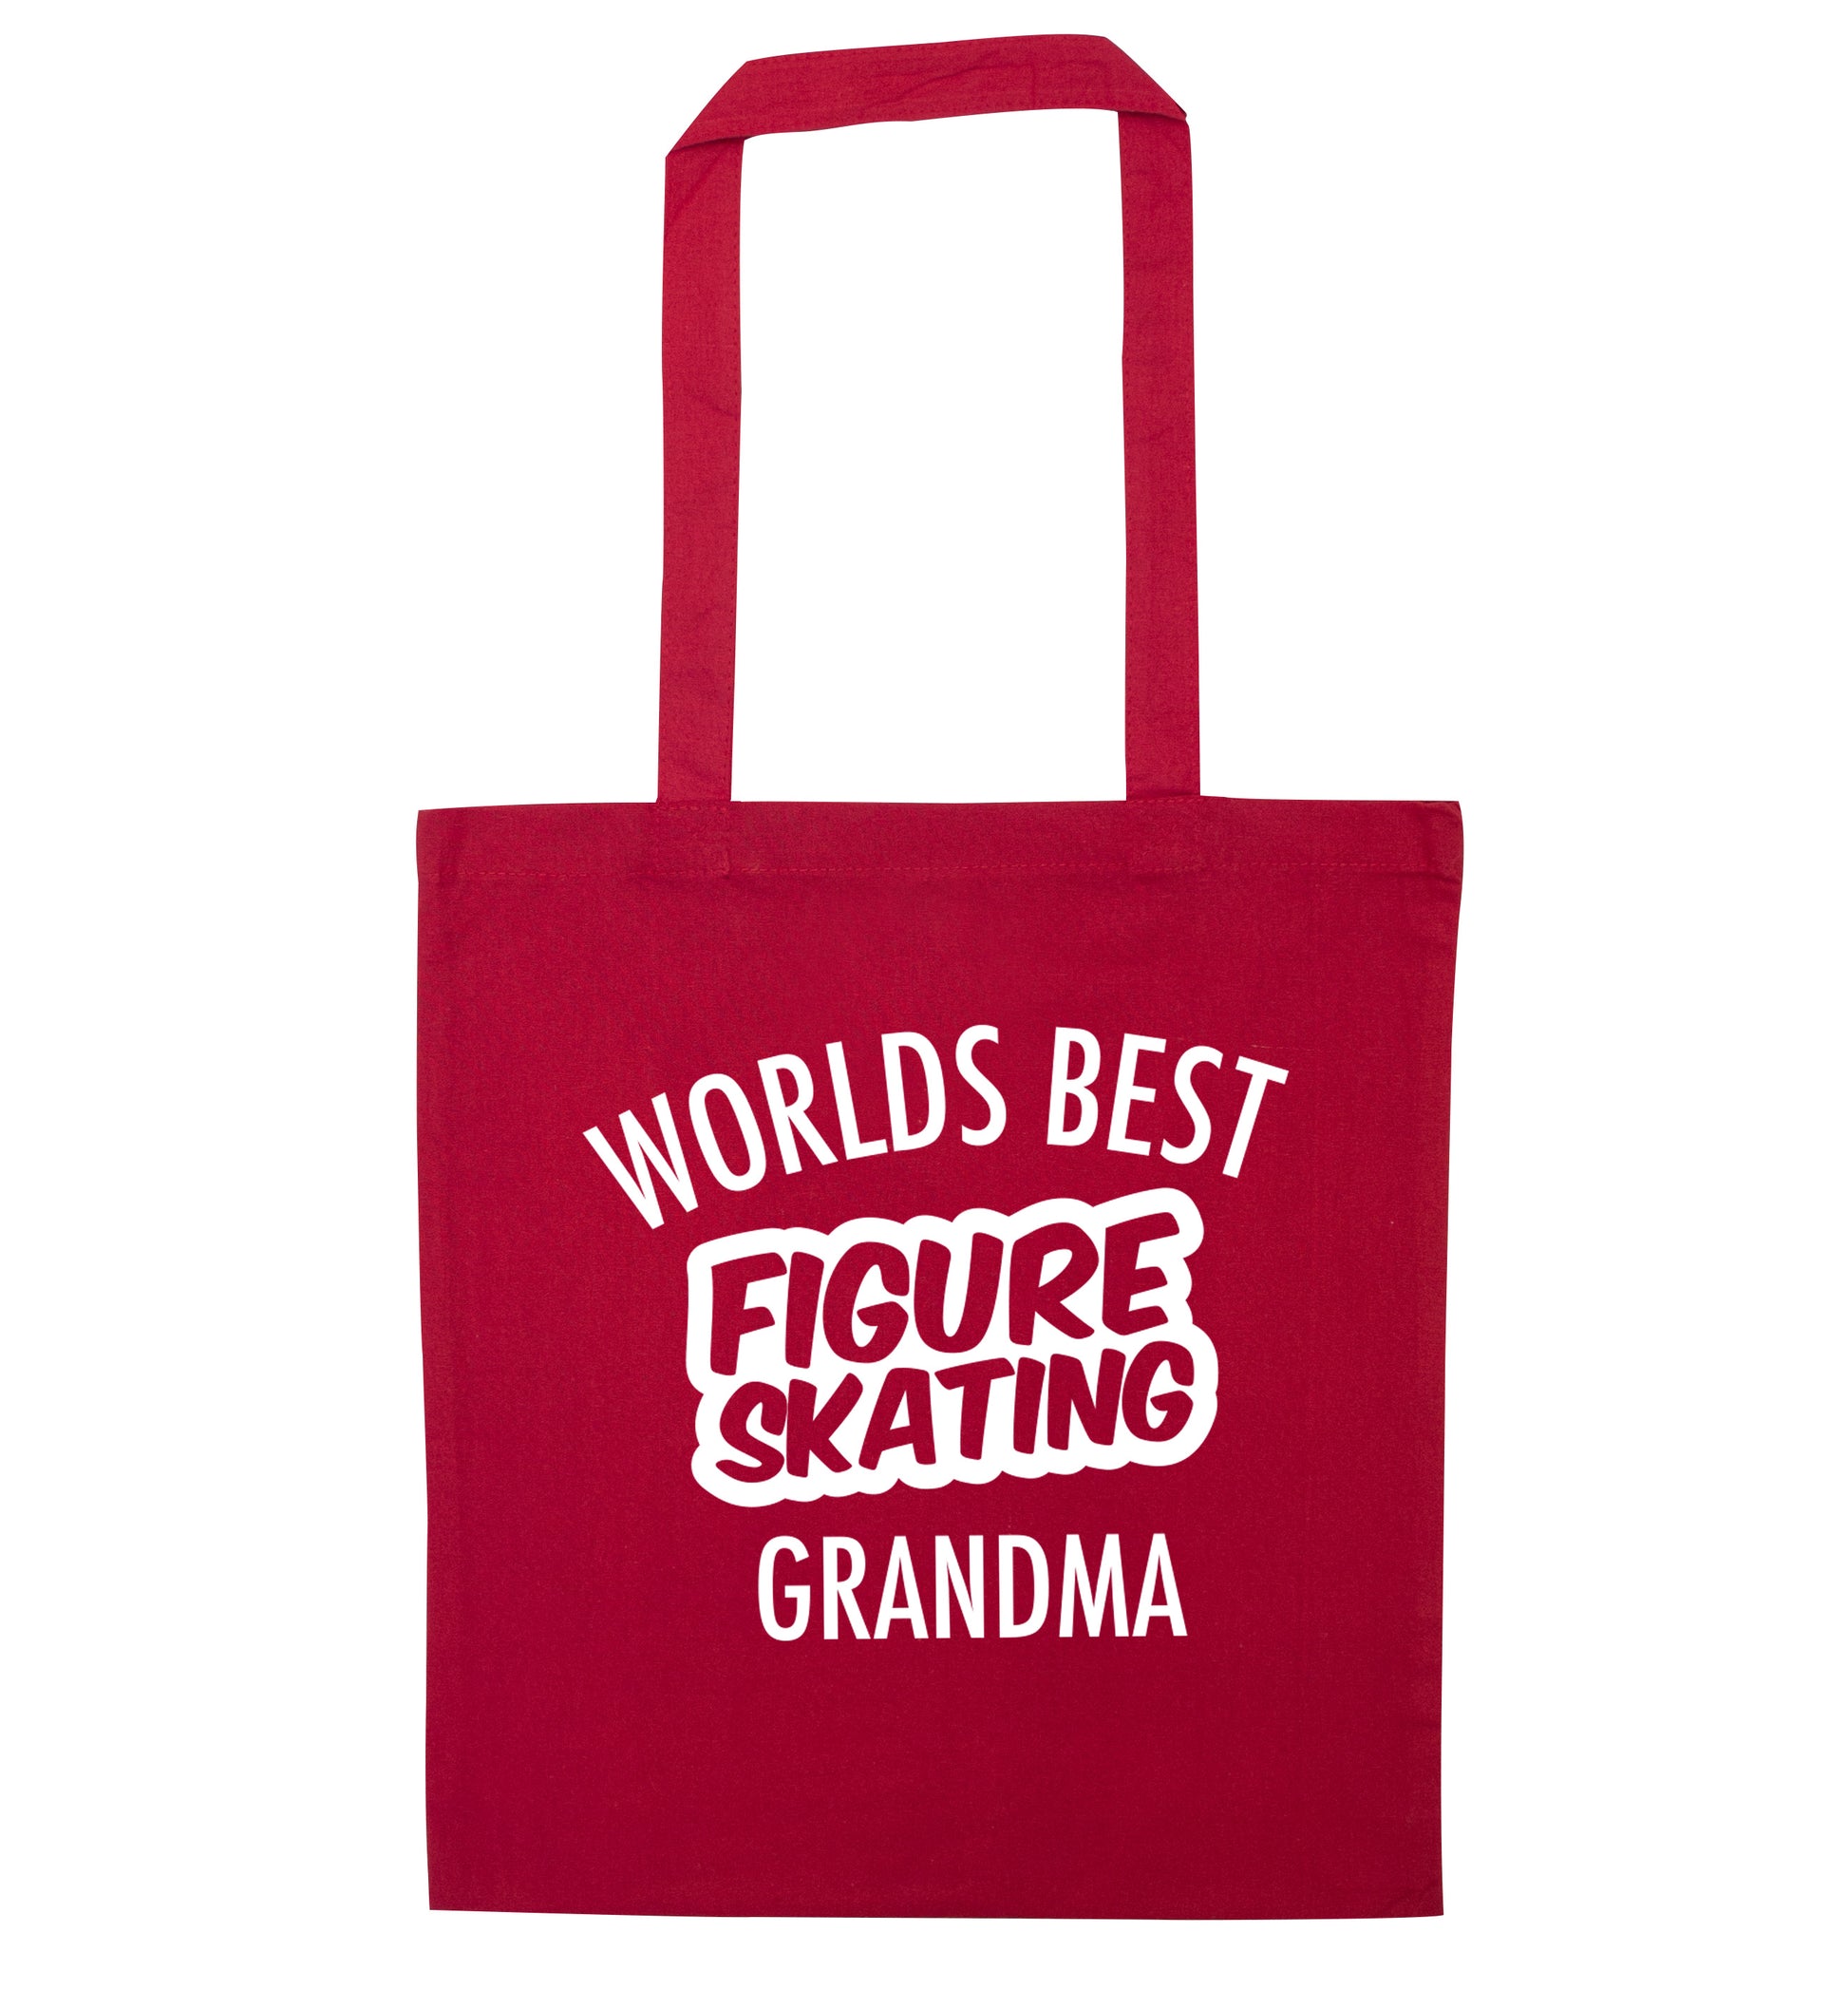 Worlds best figure skating grandma red tote bag